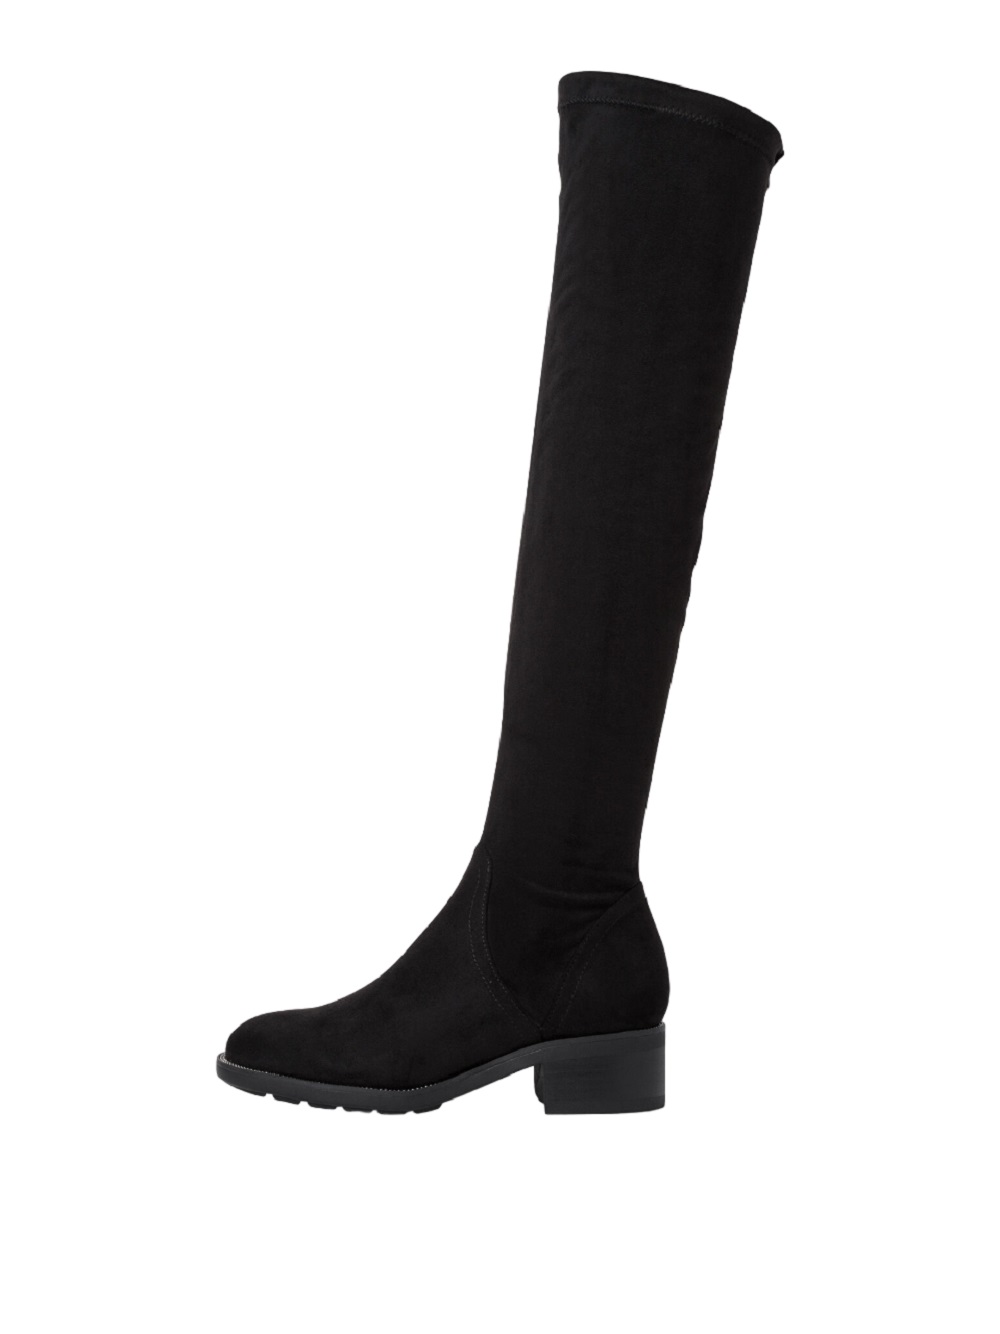 Women's Tamaris 1-25507-29 Over Knee Long Flat Boots - Black